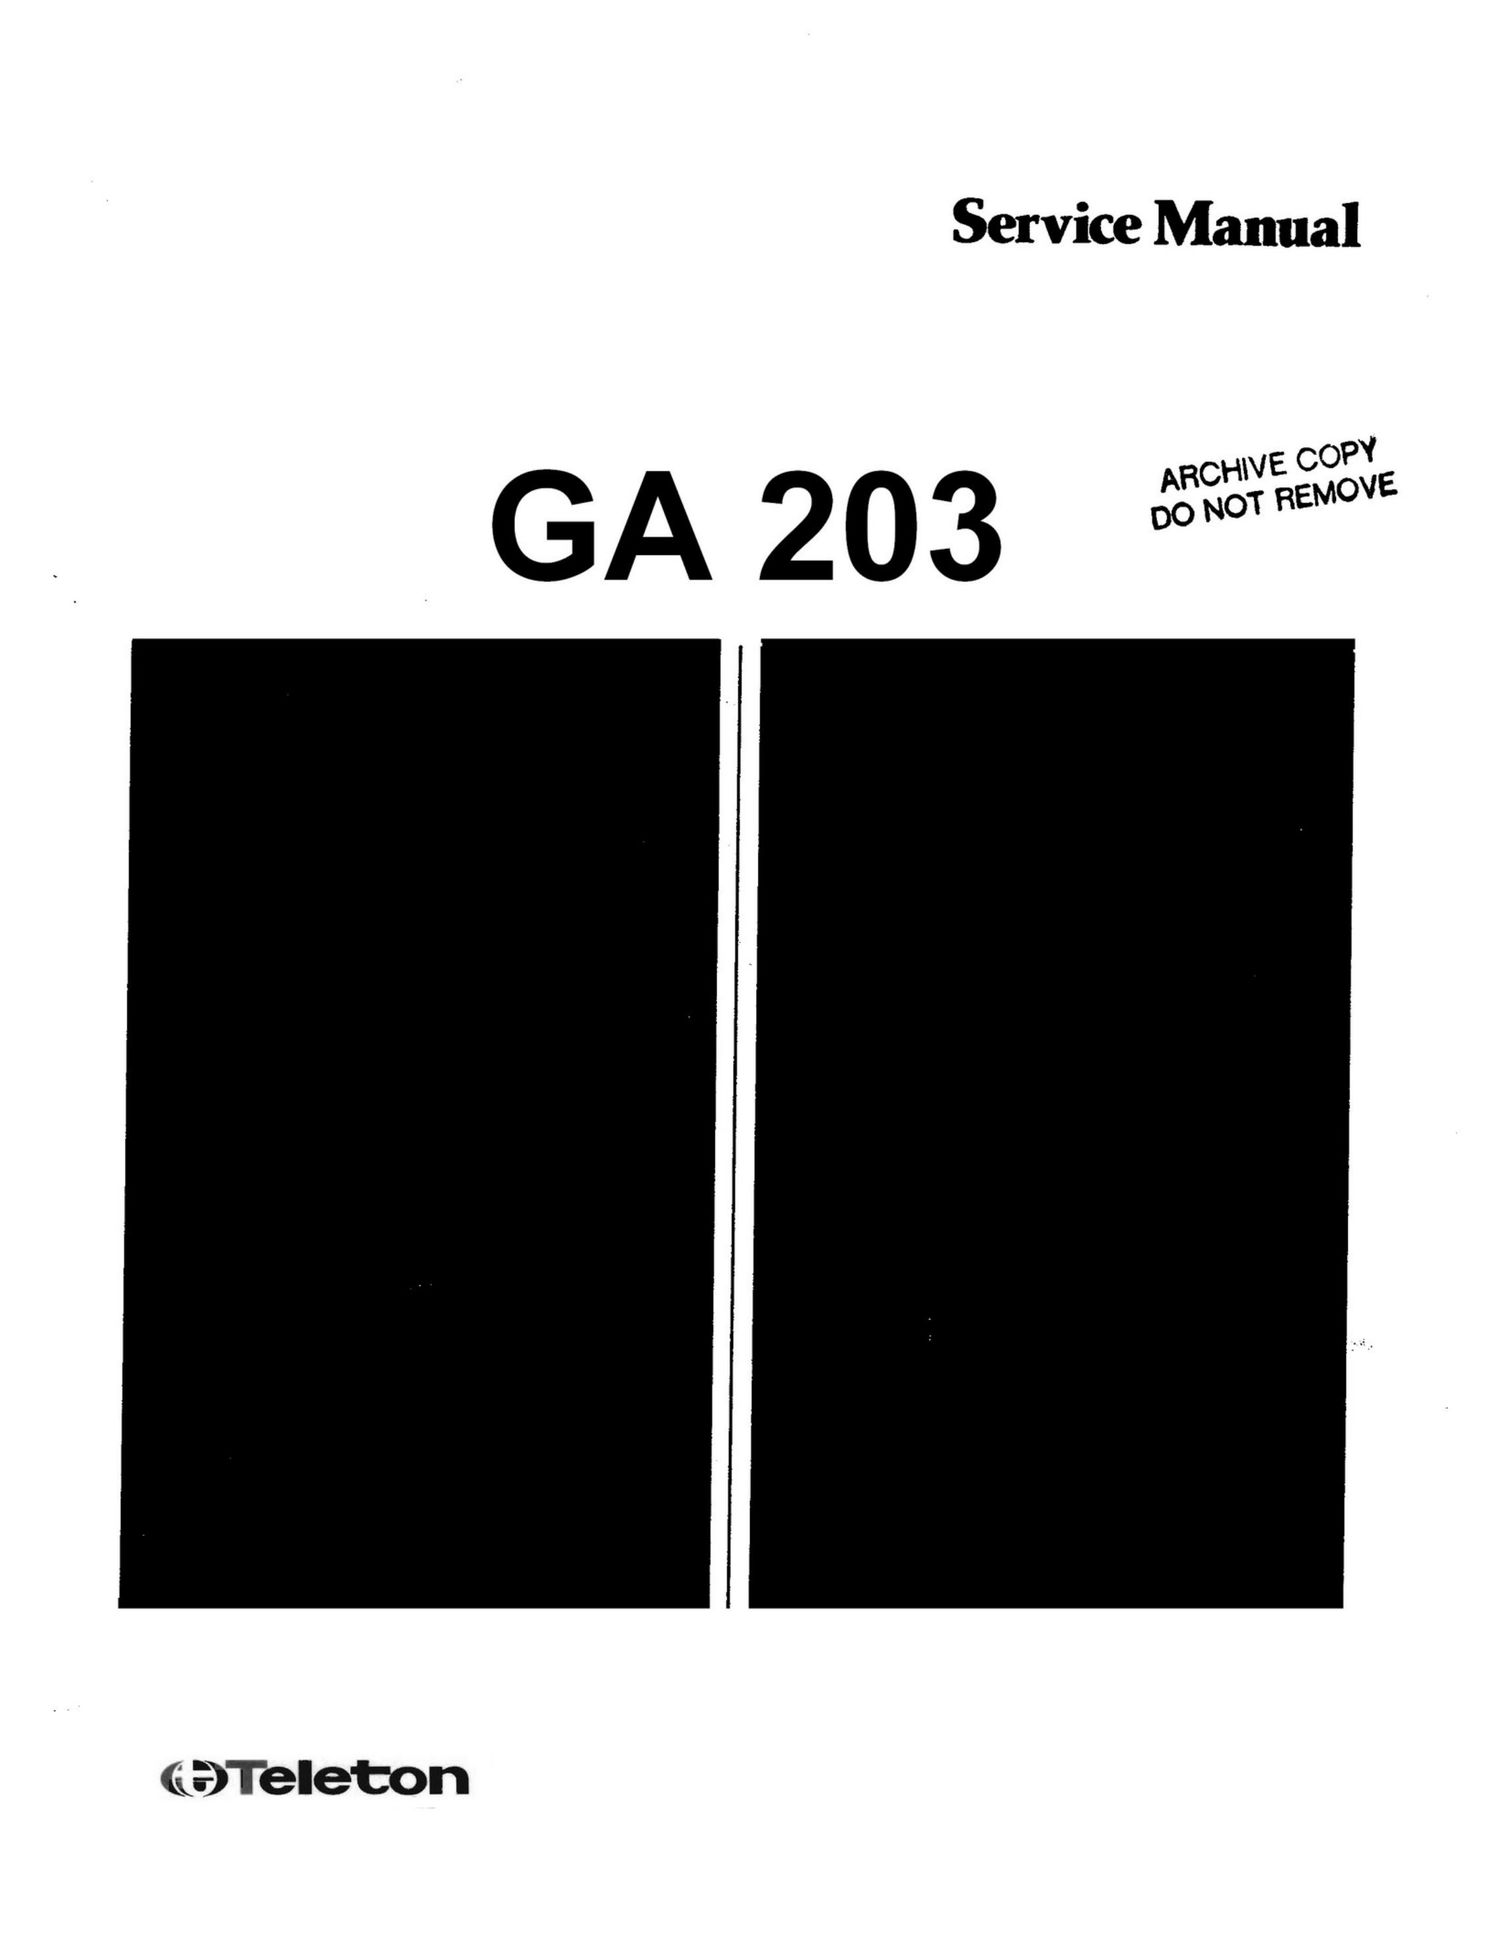 Teleton GA 203 Service Manual